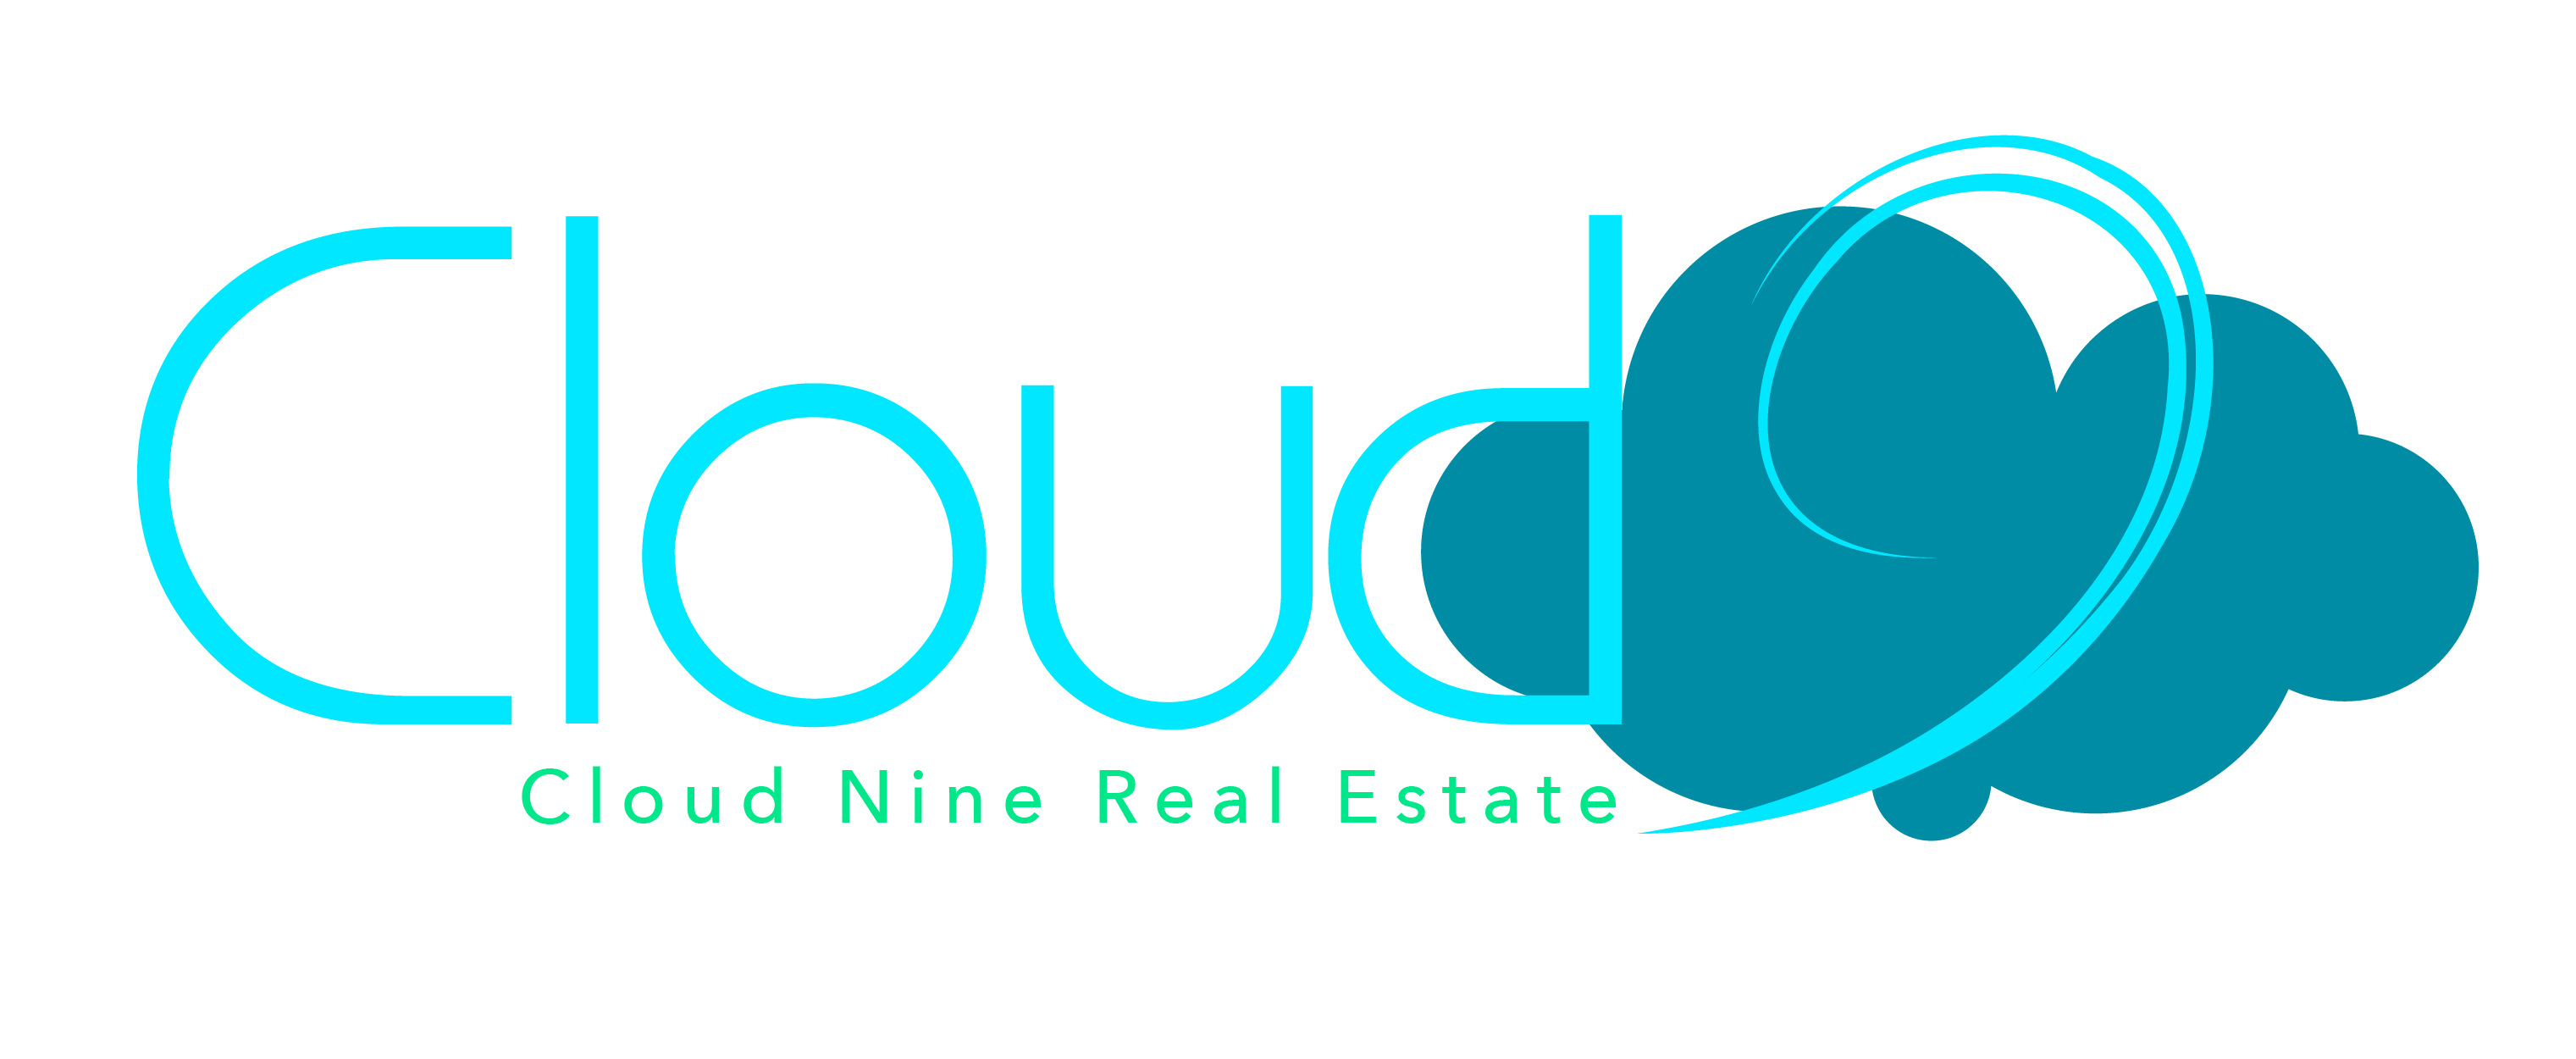 Cloud Nine Real Estate